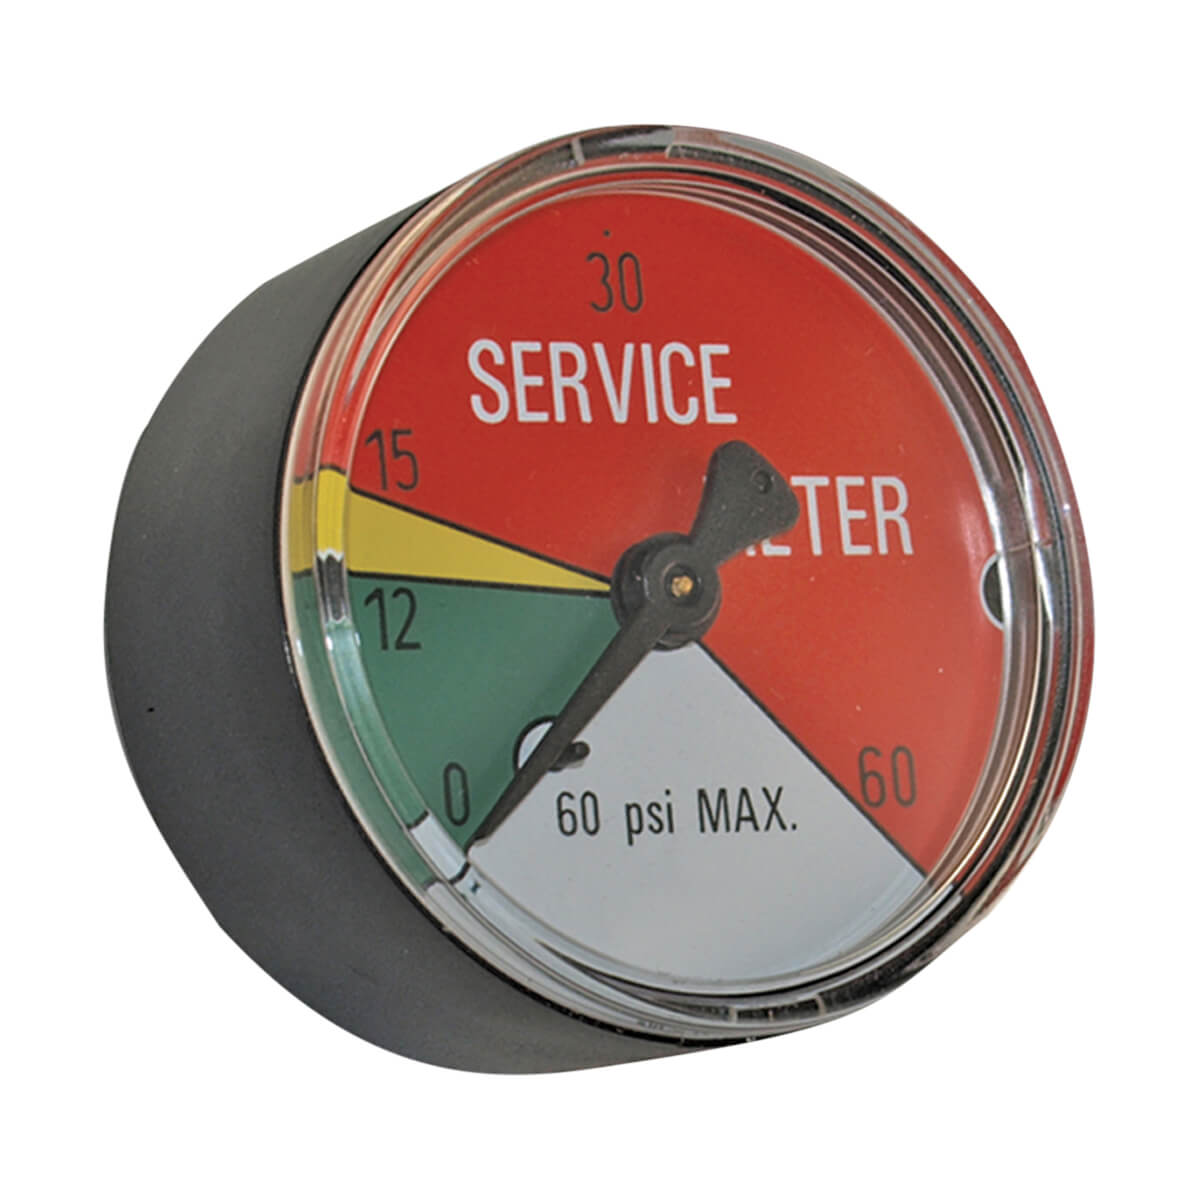 25 PSI Hydraulic Filter Service Indicator Gauge - 2-in